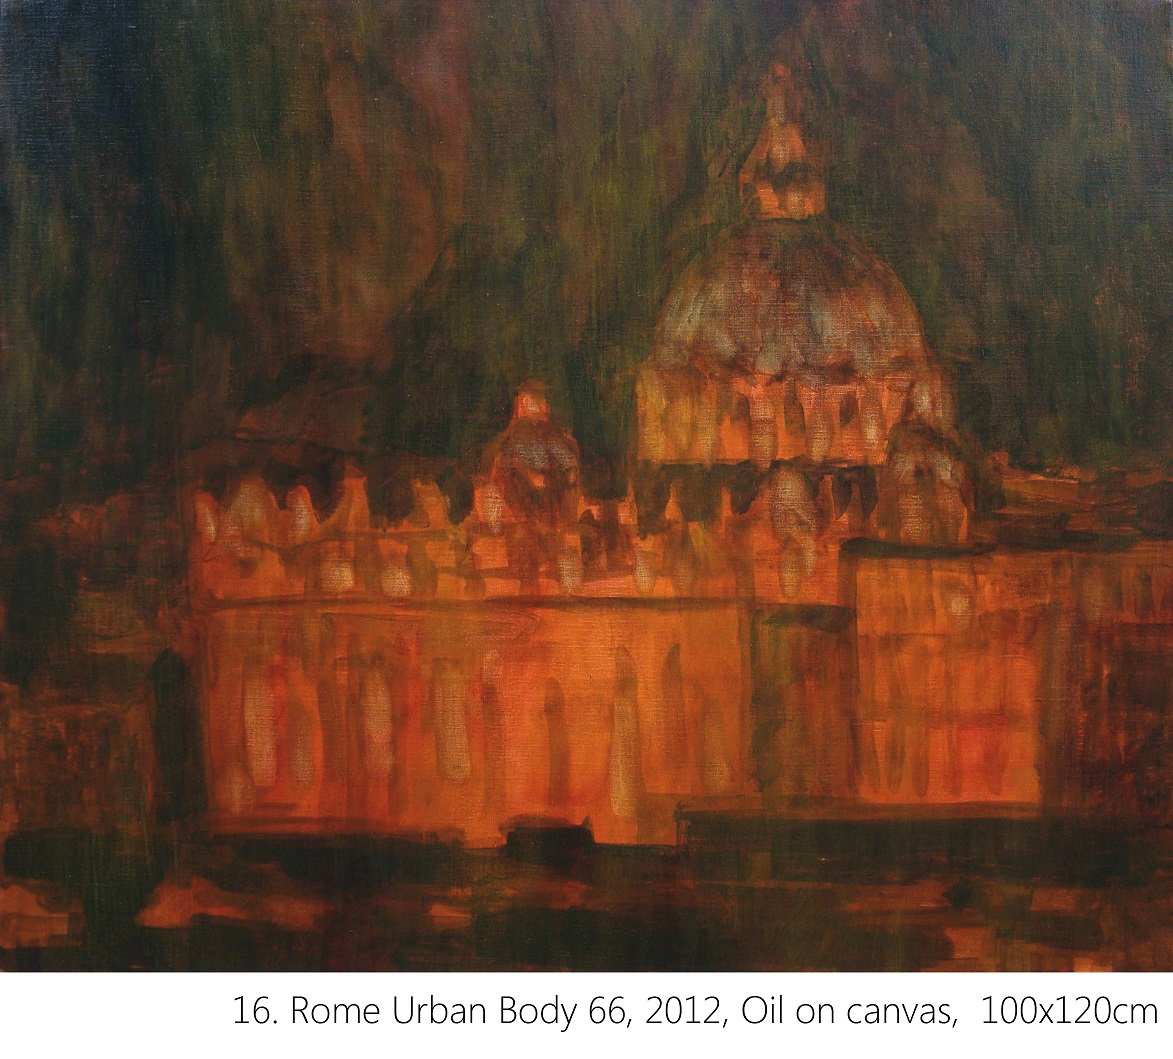 16. Rome Urban Body 66, 2012, Oil on canvas, 100x120cm